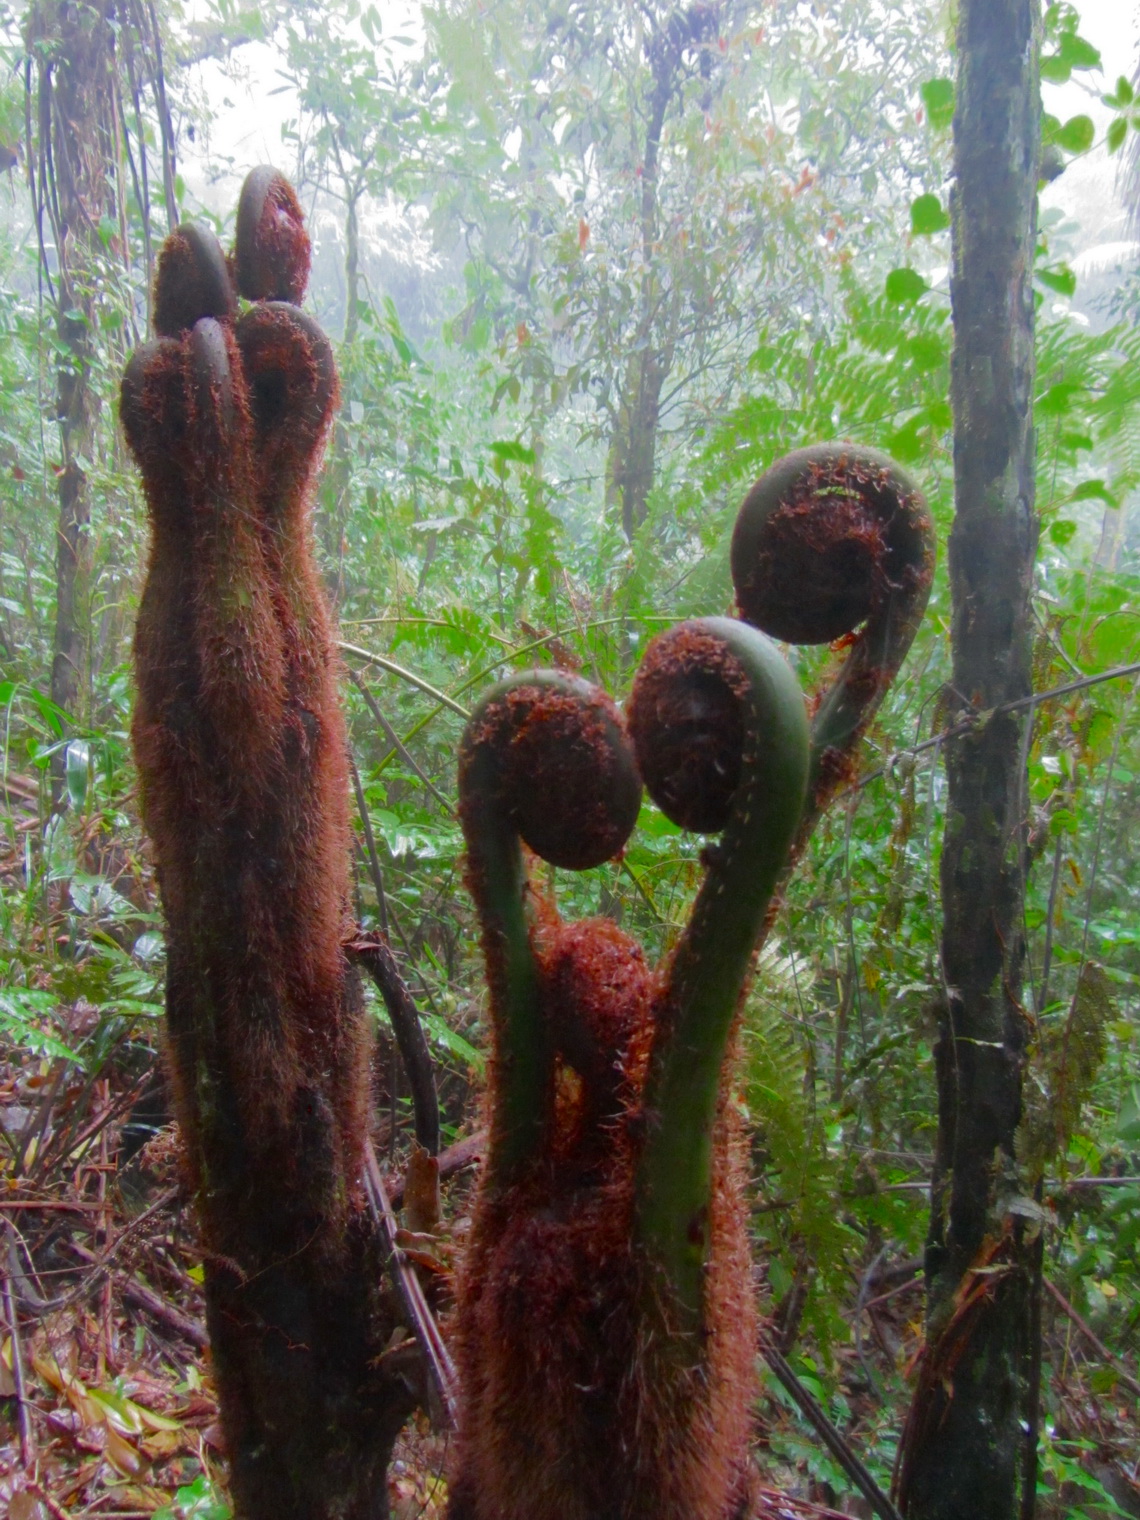 Strange plants of the jungle